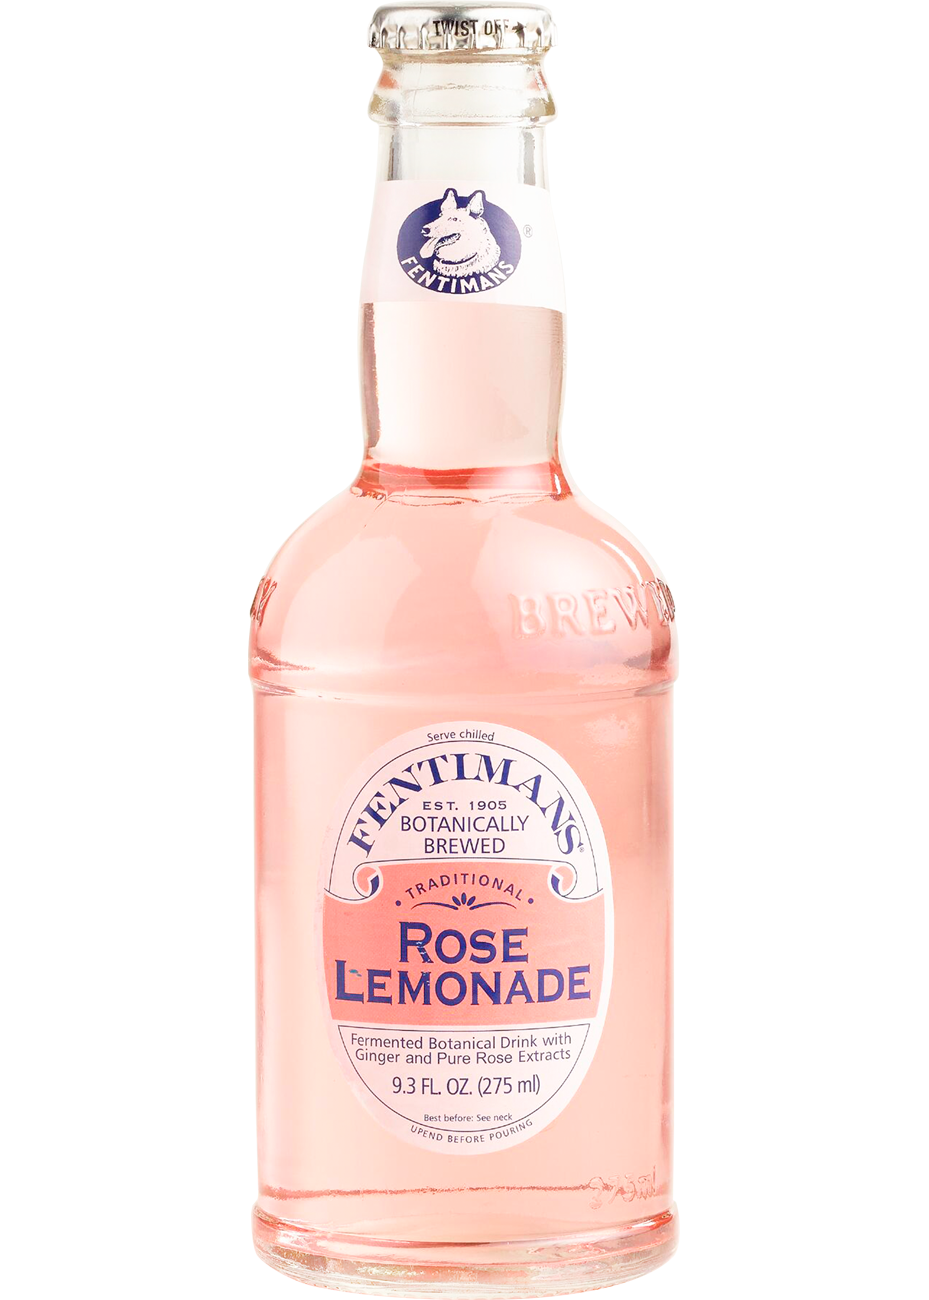 Вкус розовый лимонад. Fentimans лимонад Rose. Напиток Rose Lemonade. Розовый лимонад Fentimans.